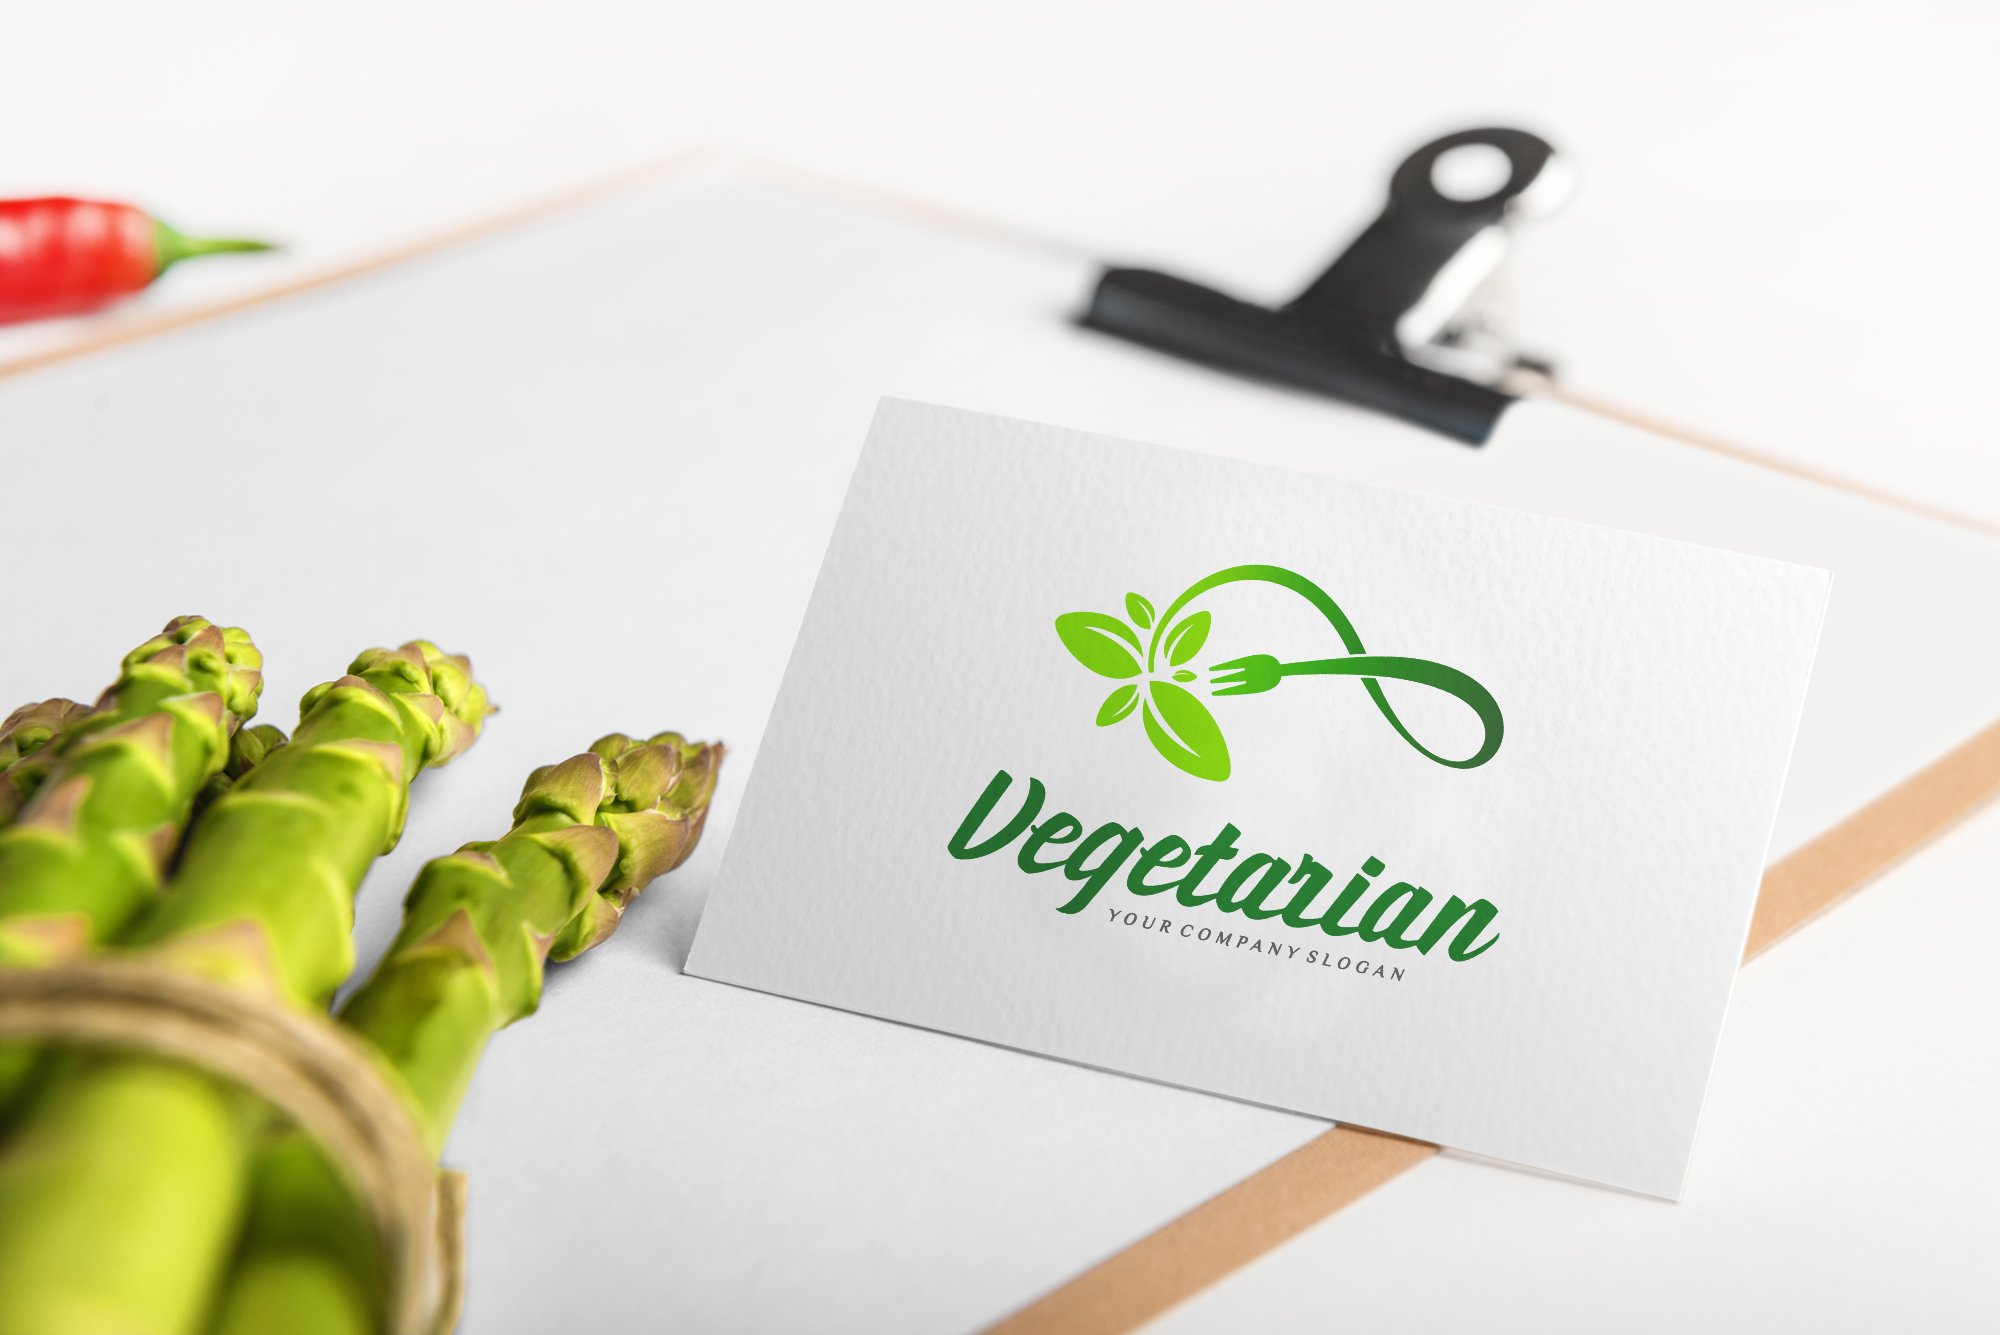 Vegetarian Logo preview image.